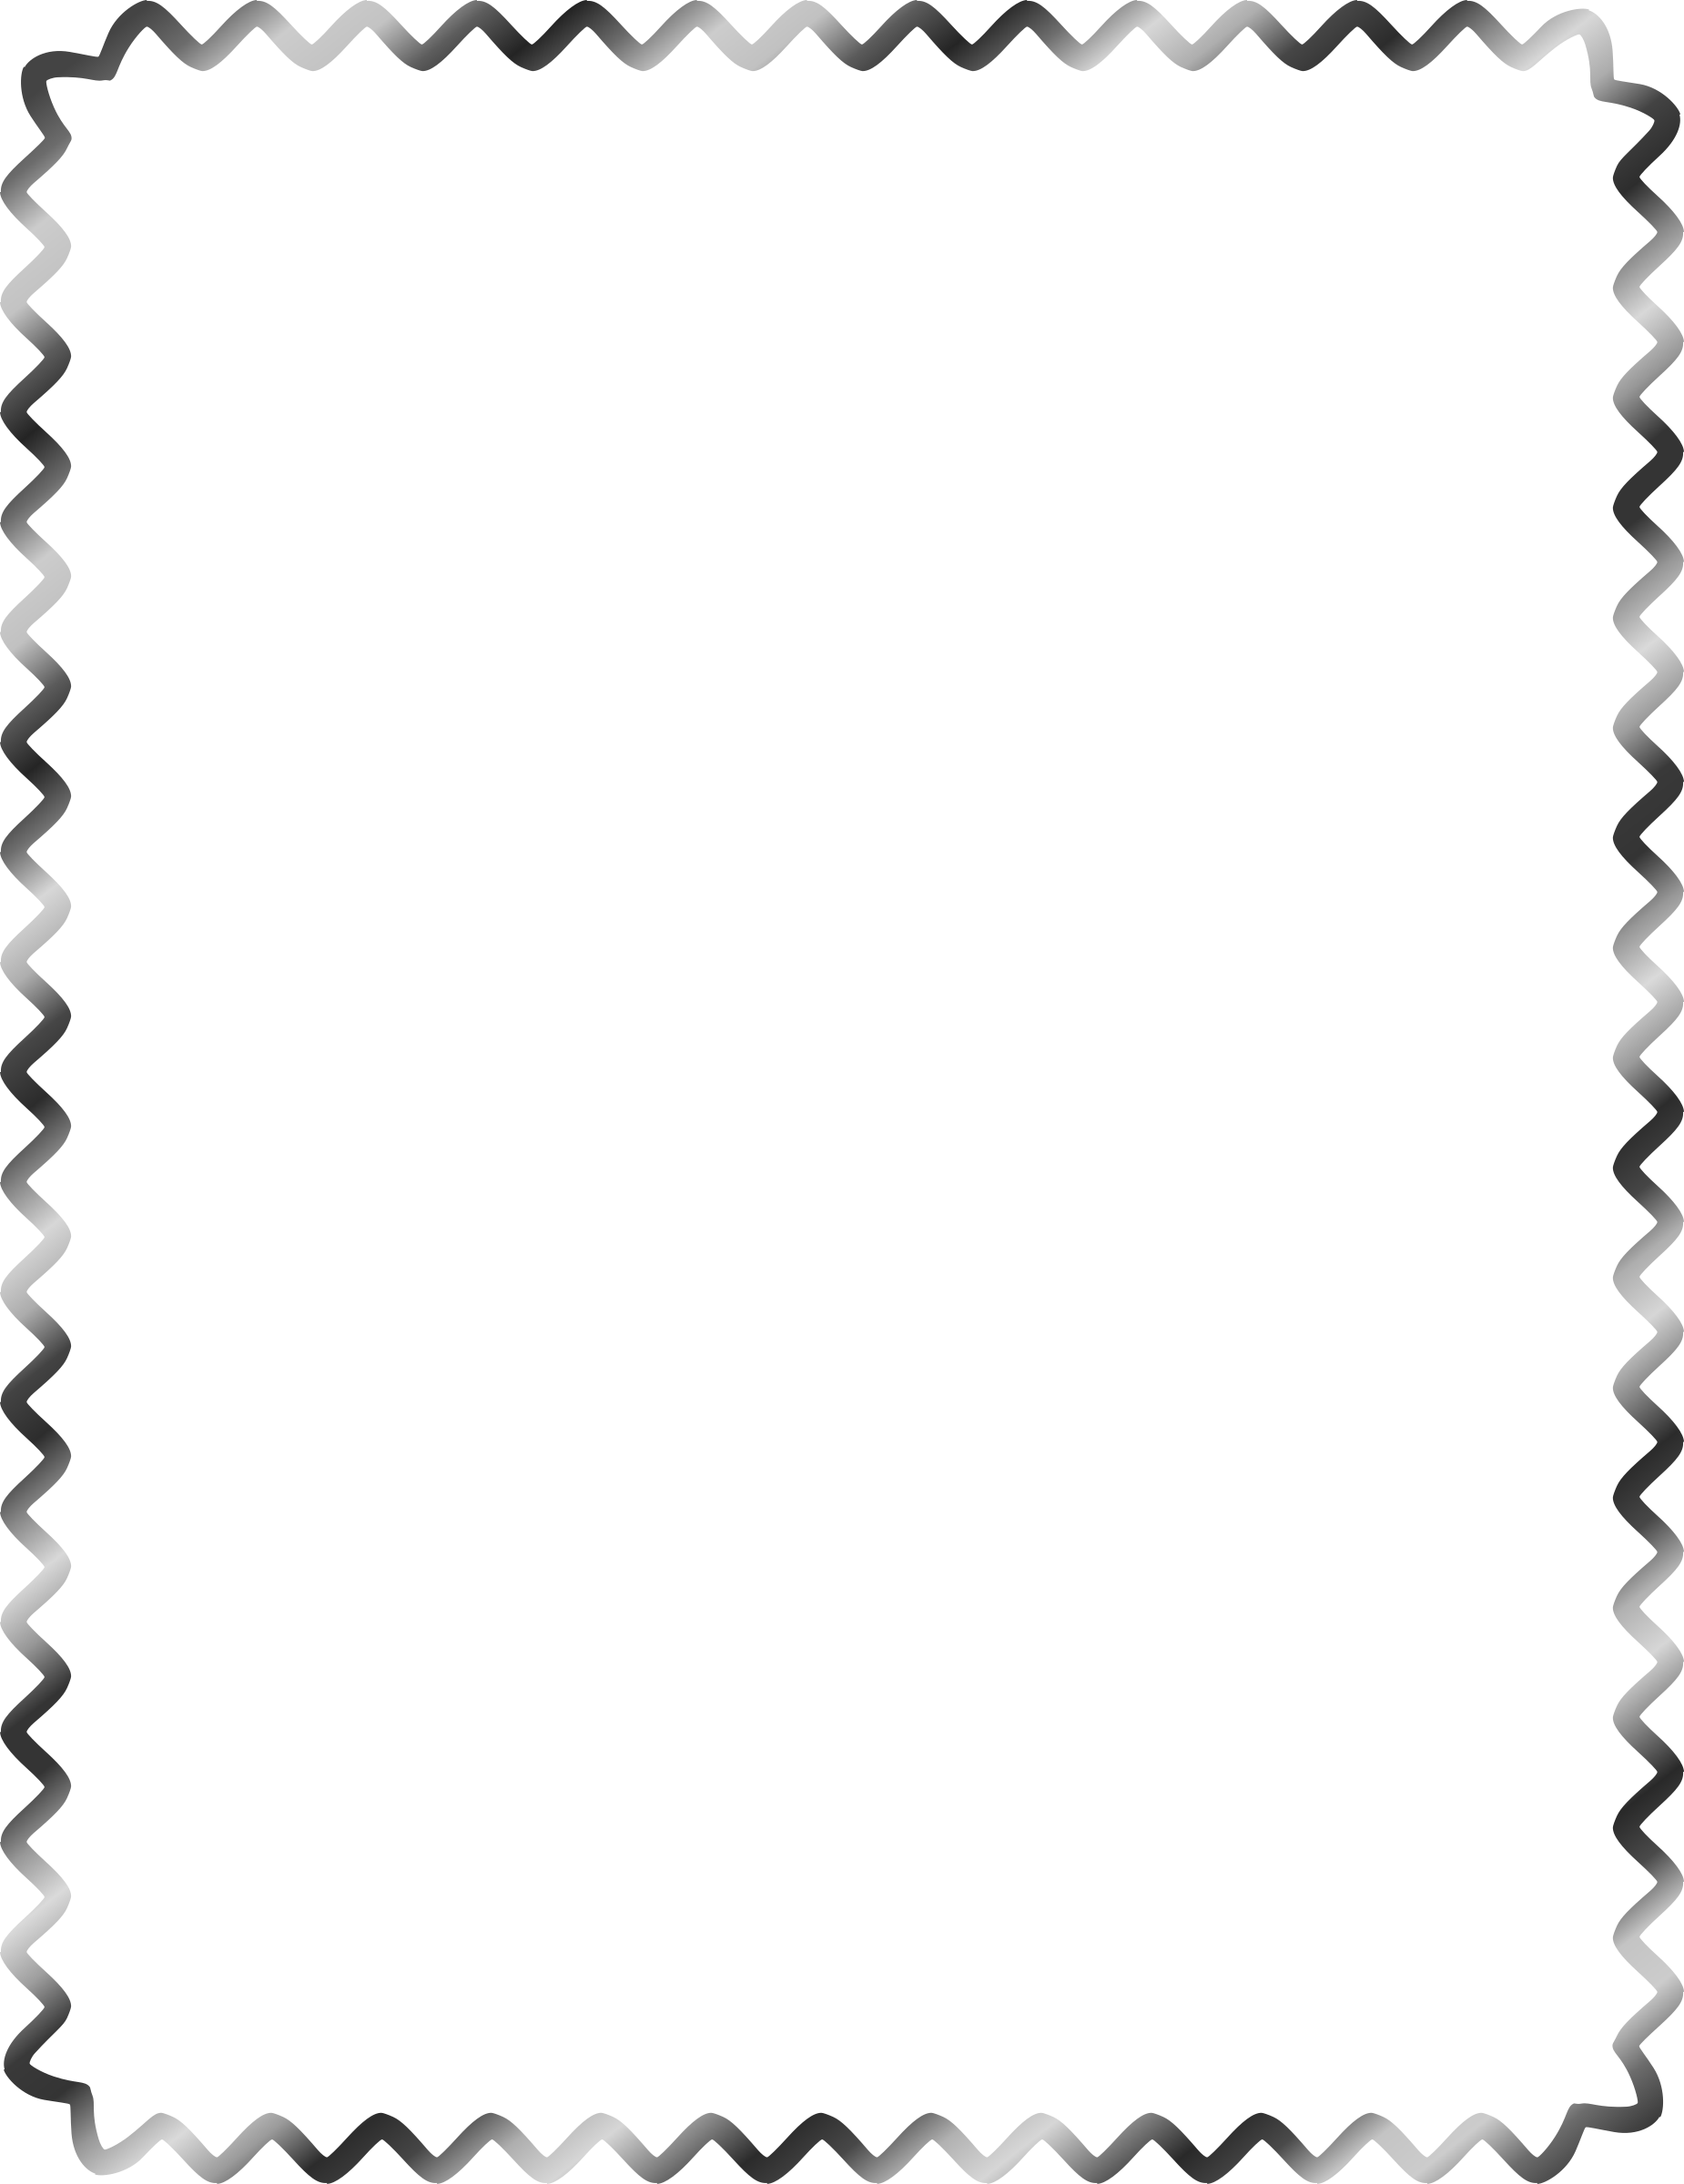 Sine Wave Border - Black And White Border (1850x2400)